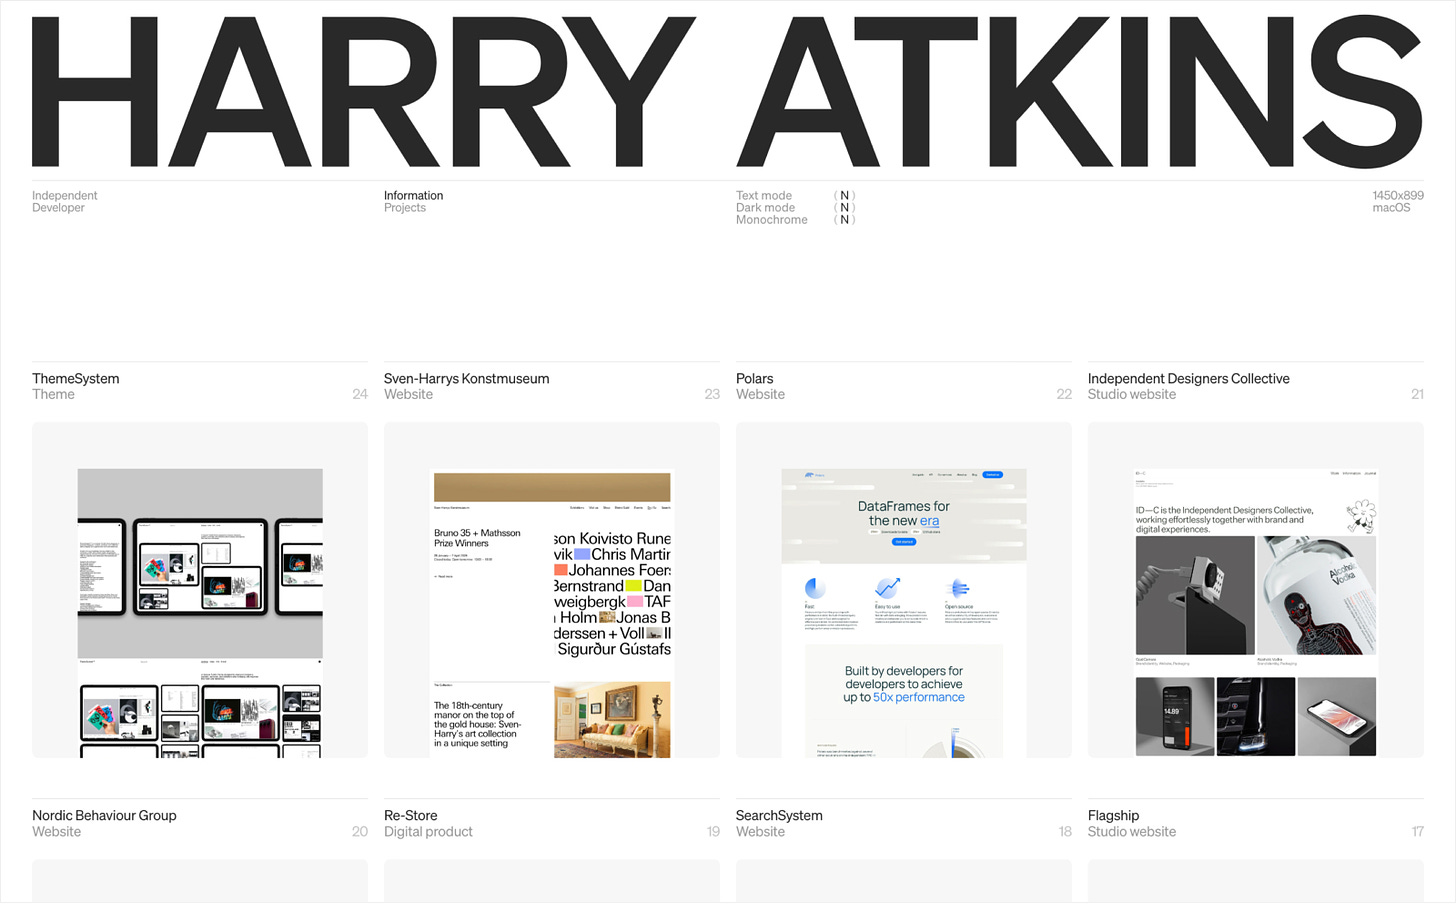 Harry atkin's portfolio